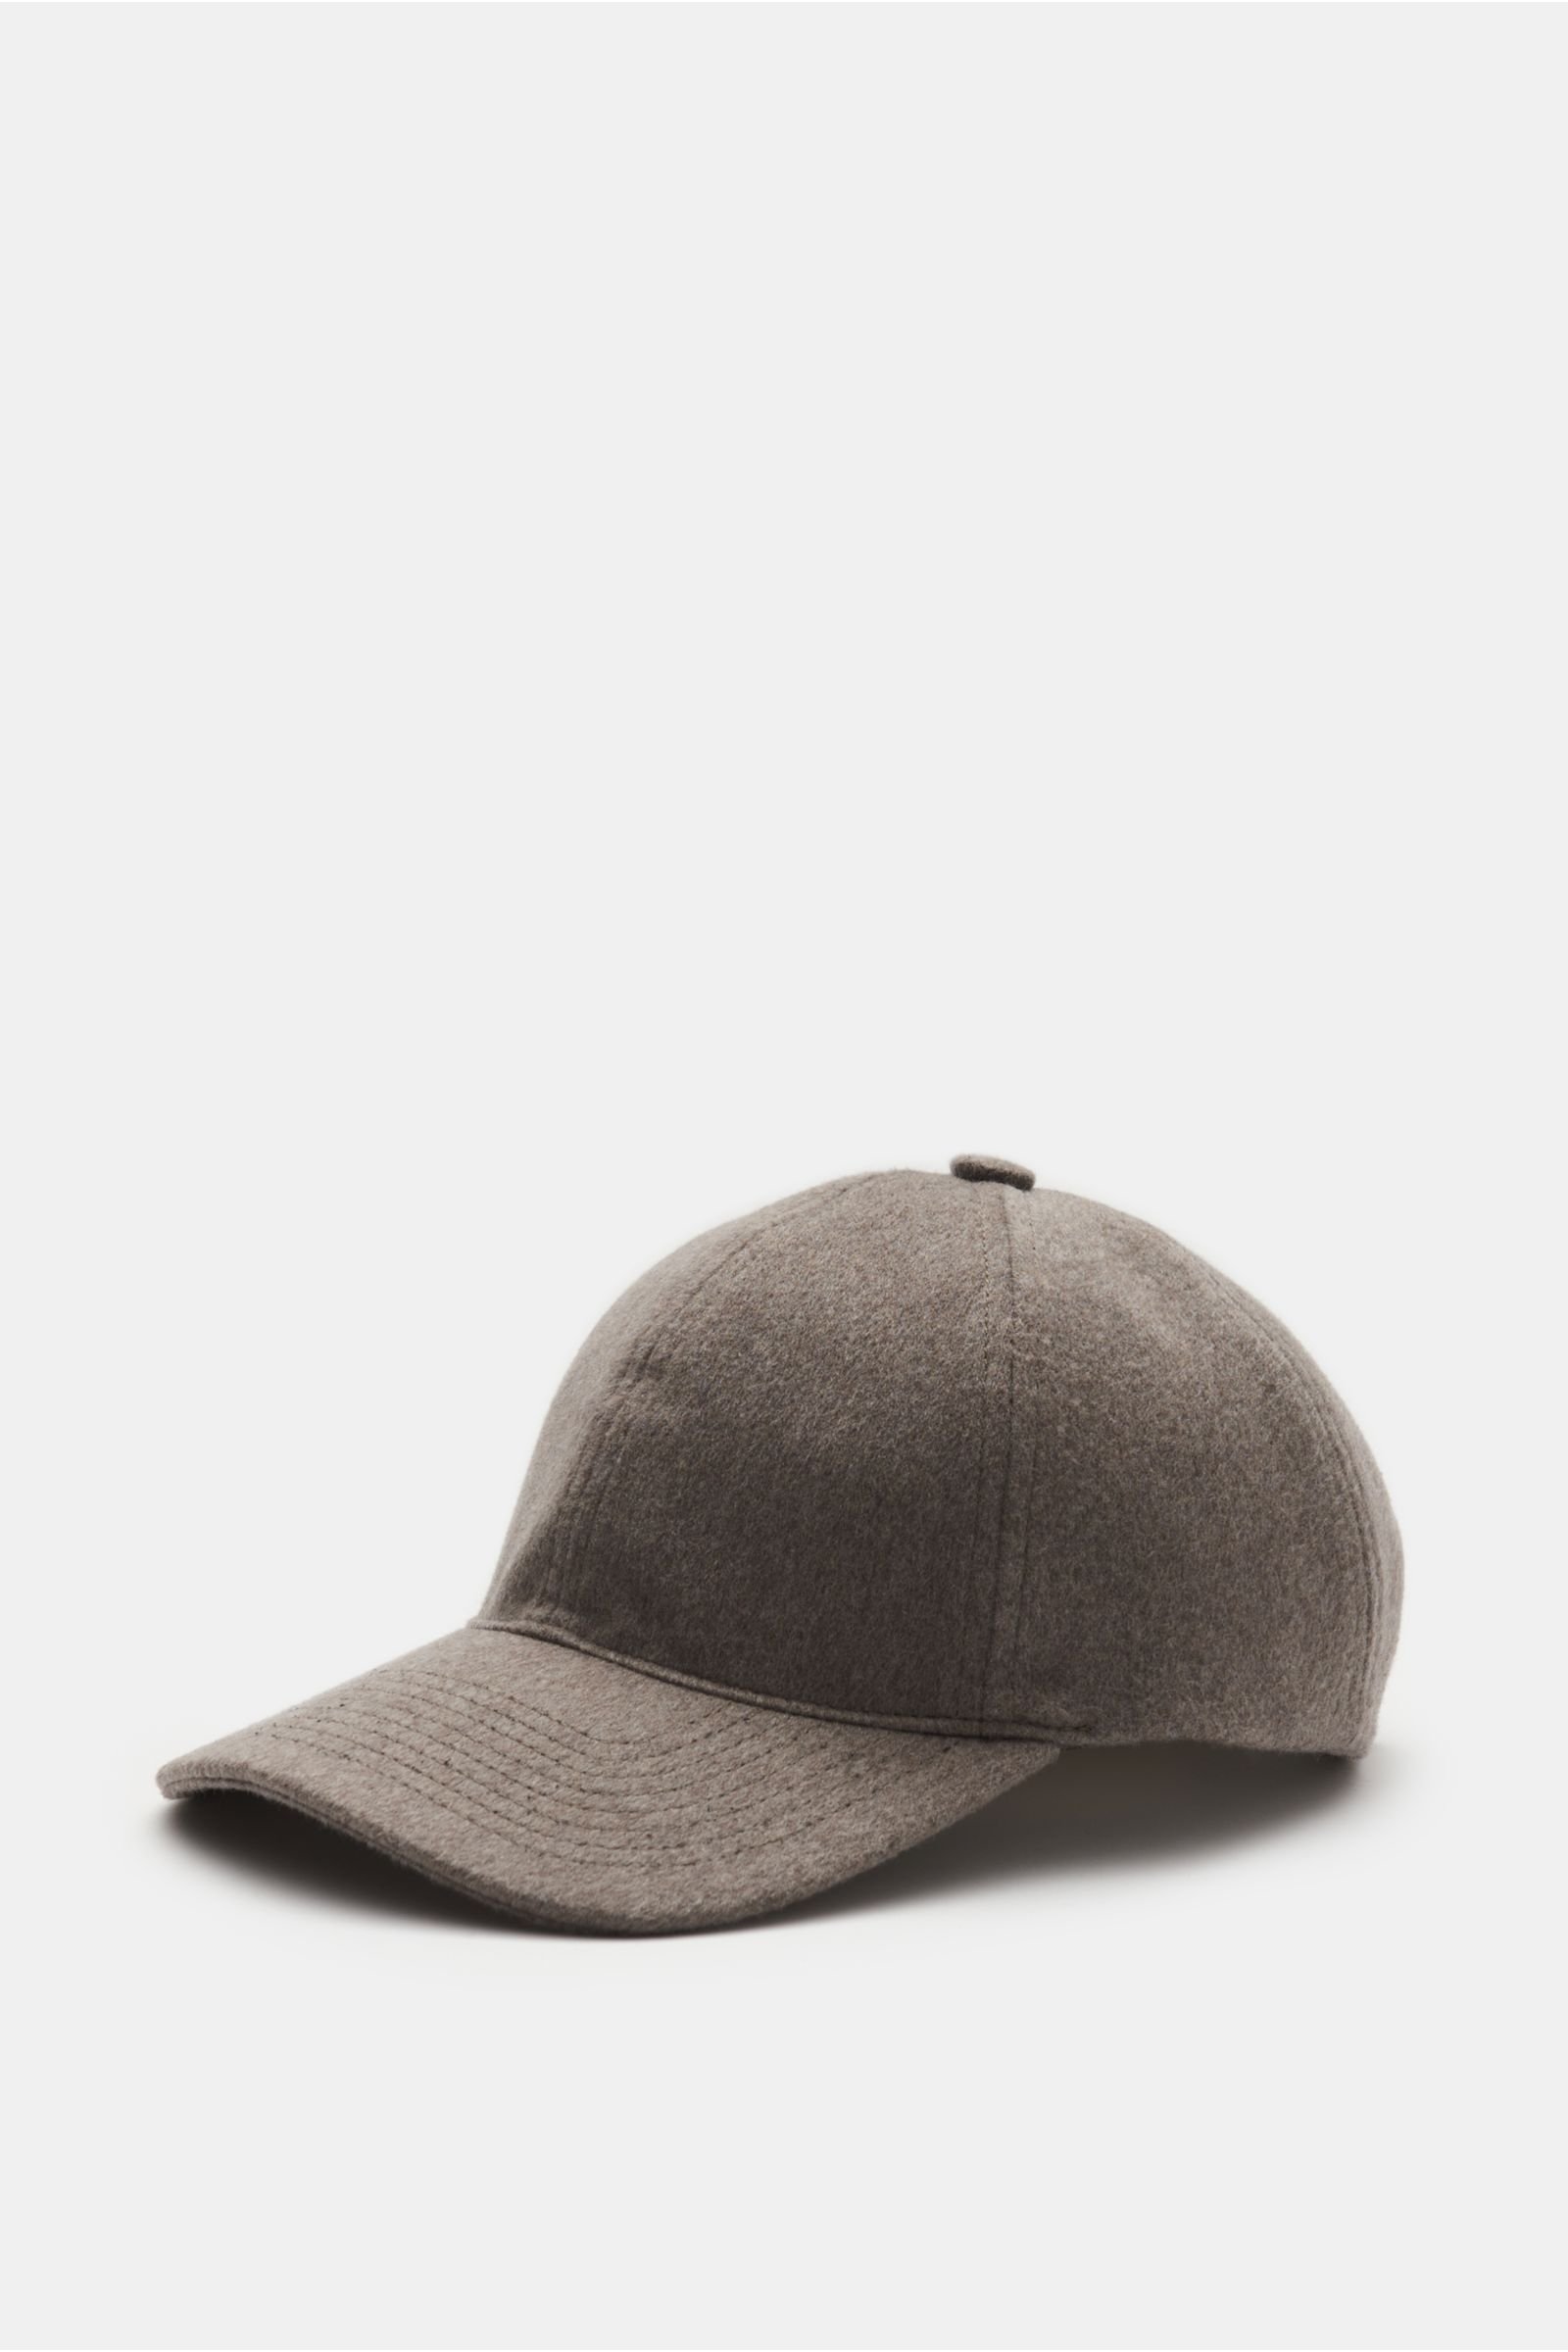 VARSITY HEADWEAR cashmere baseball cap grey | BRAUN Hamburg